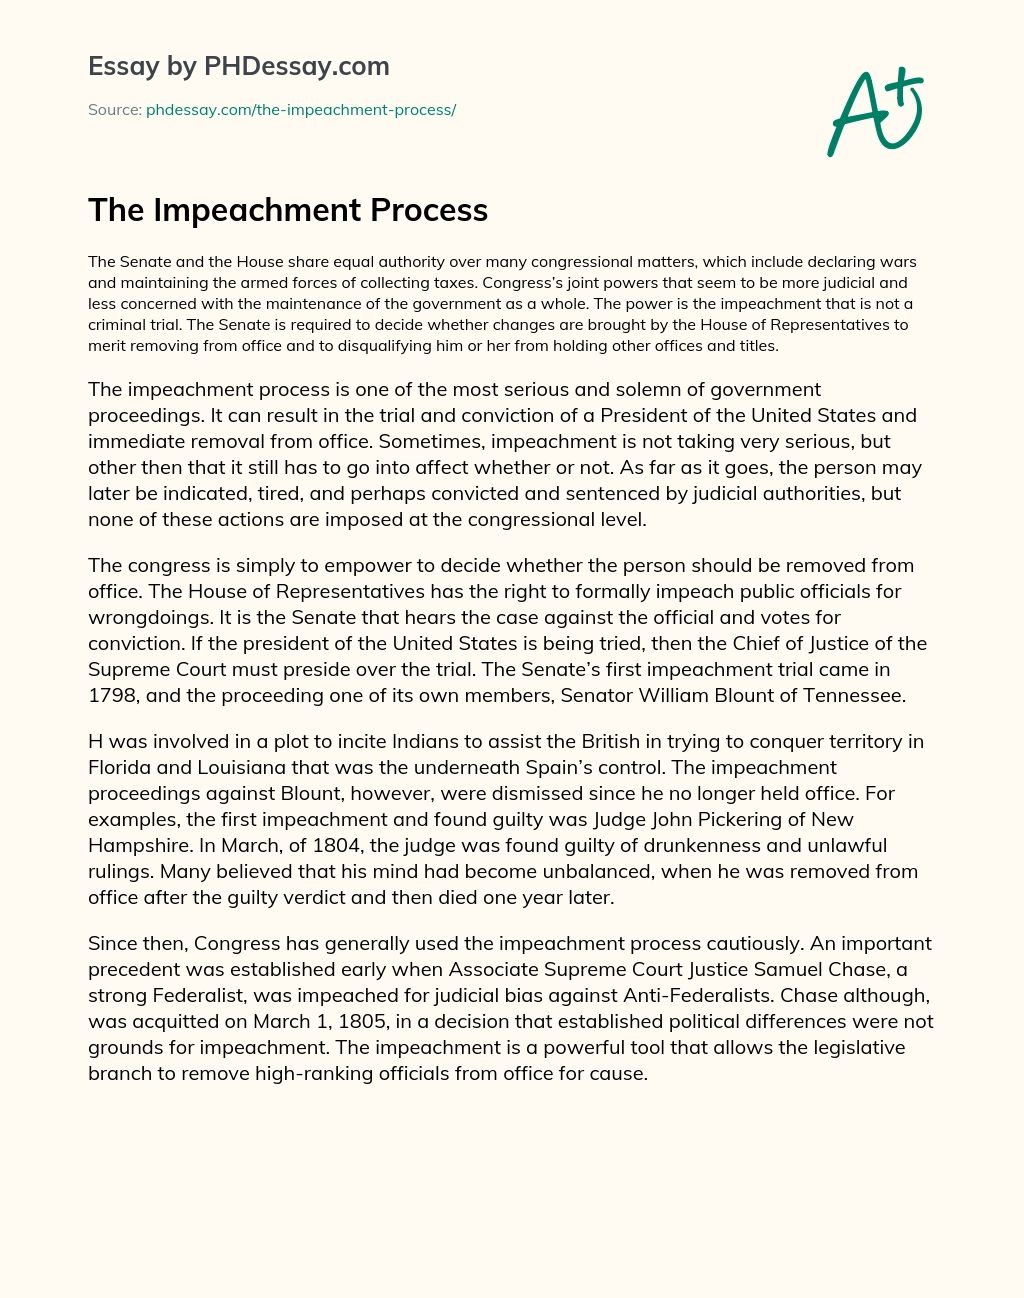 The Impeachment Process essay